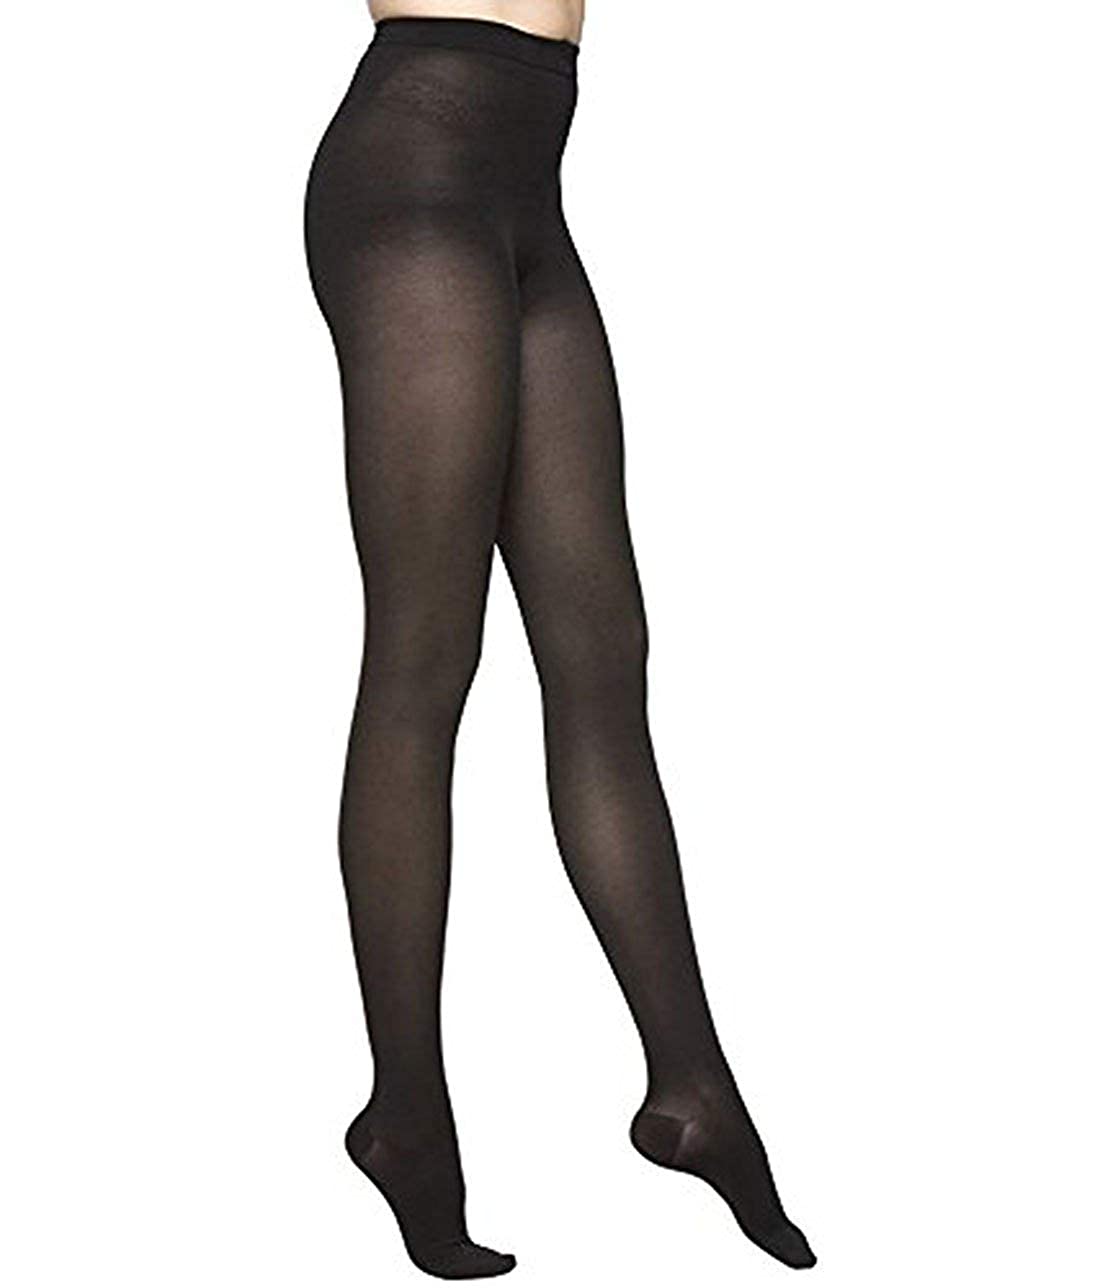 Women's Nylon Panty Hose Long Exotic Stockings Tights - Pack of 02 [ Nari  -238]